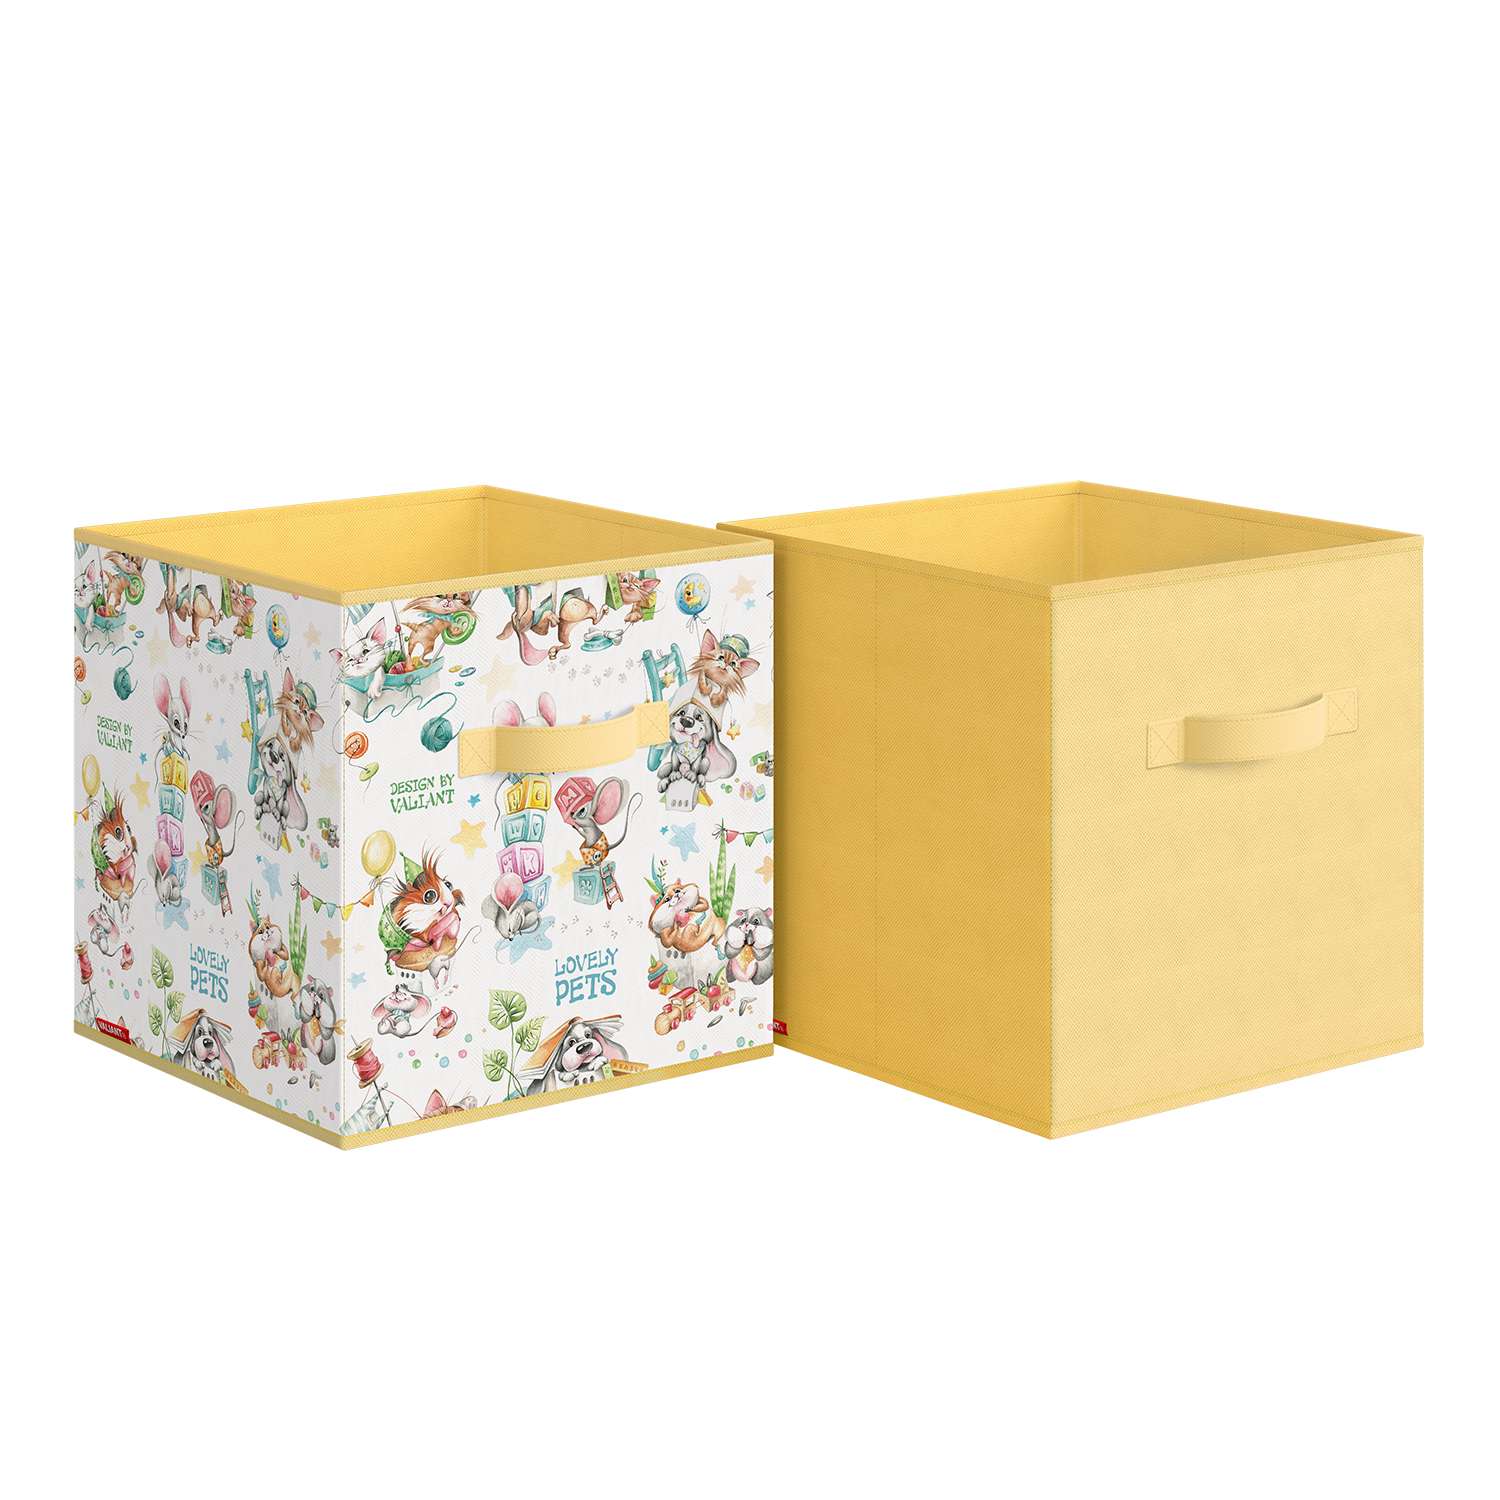 Коробка для хранения VALIANT набор 2 шт. 31*31*31 см - фото 1